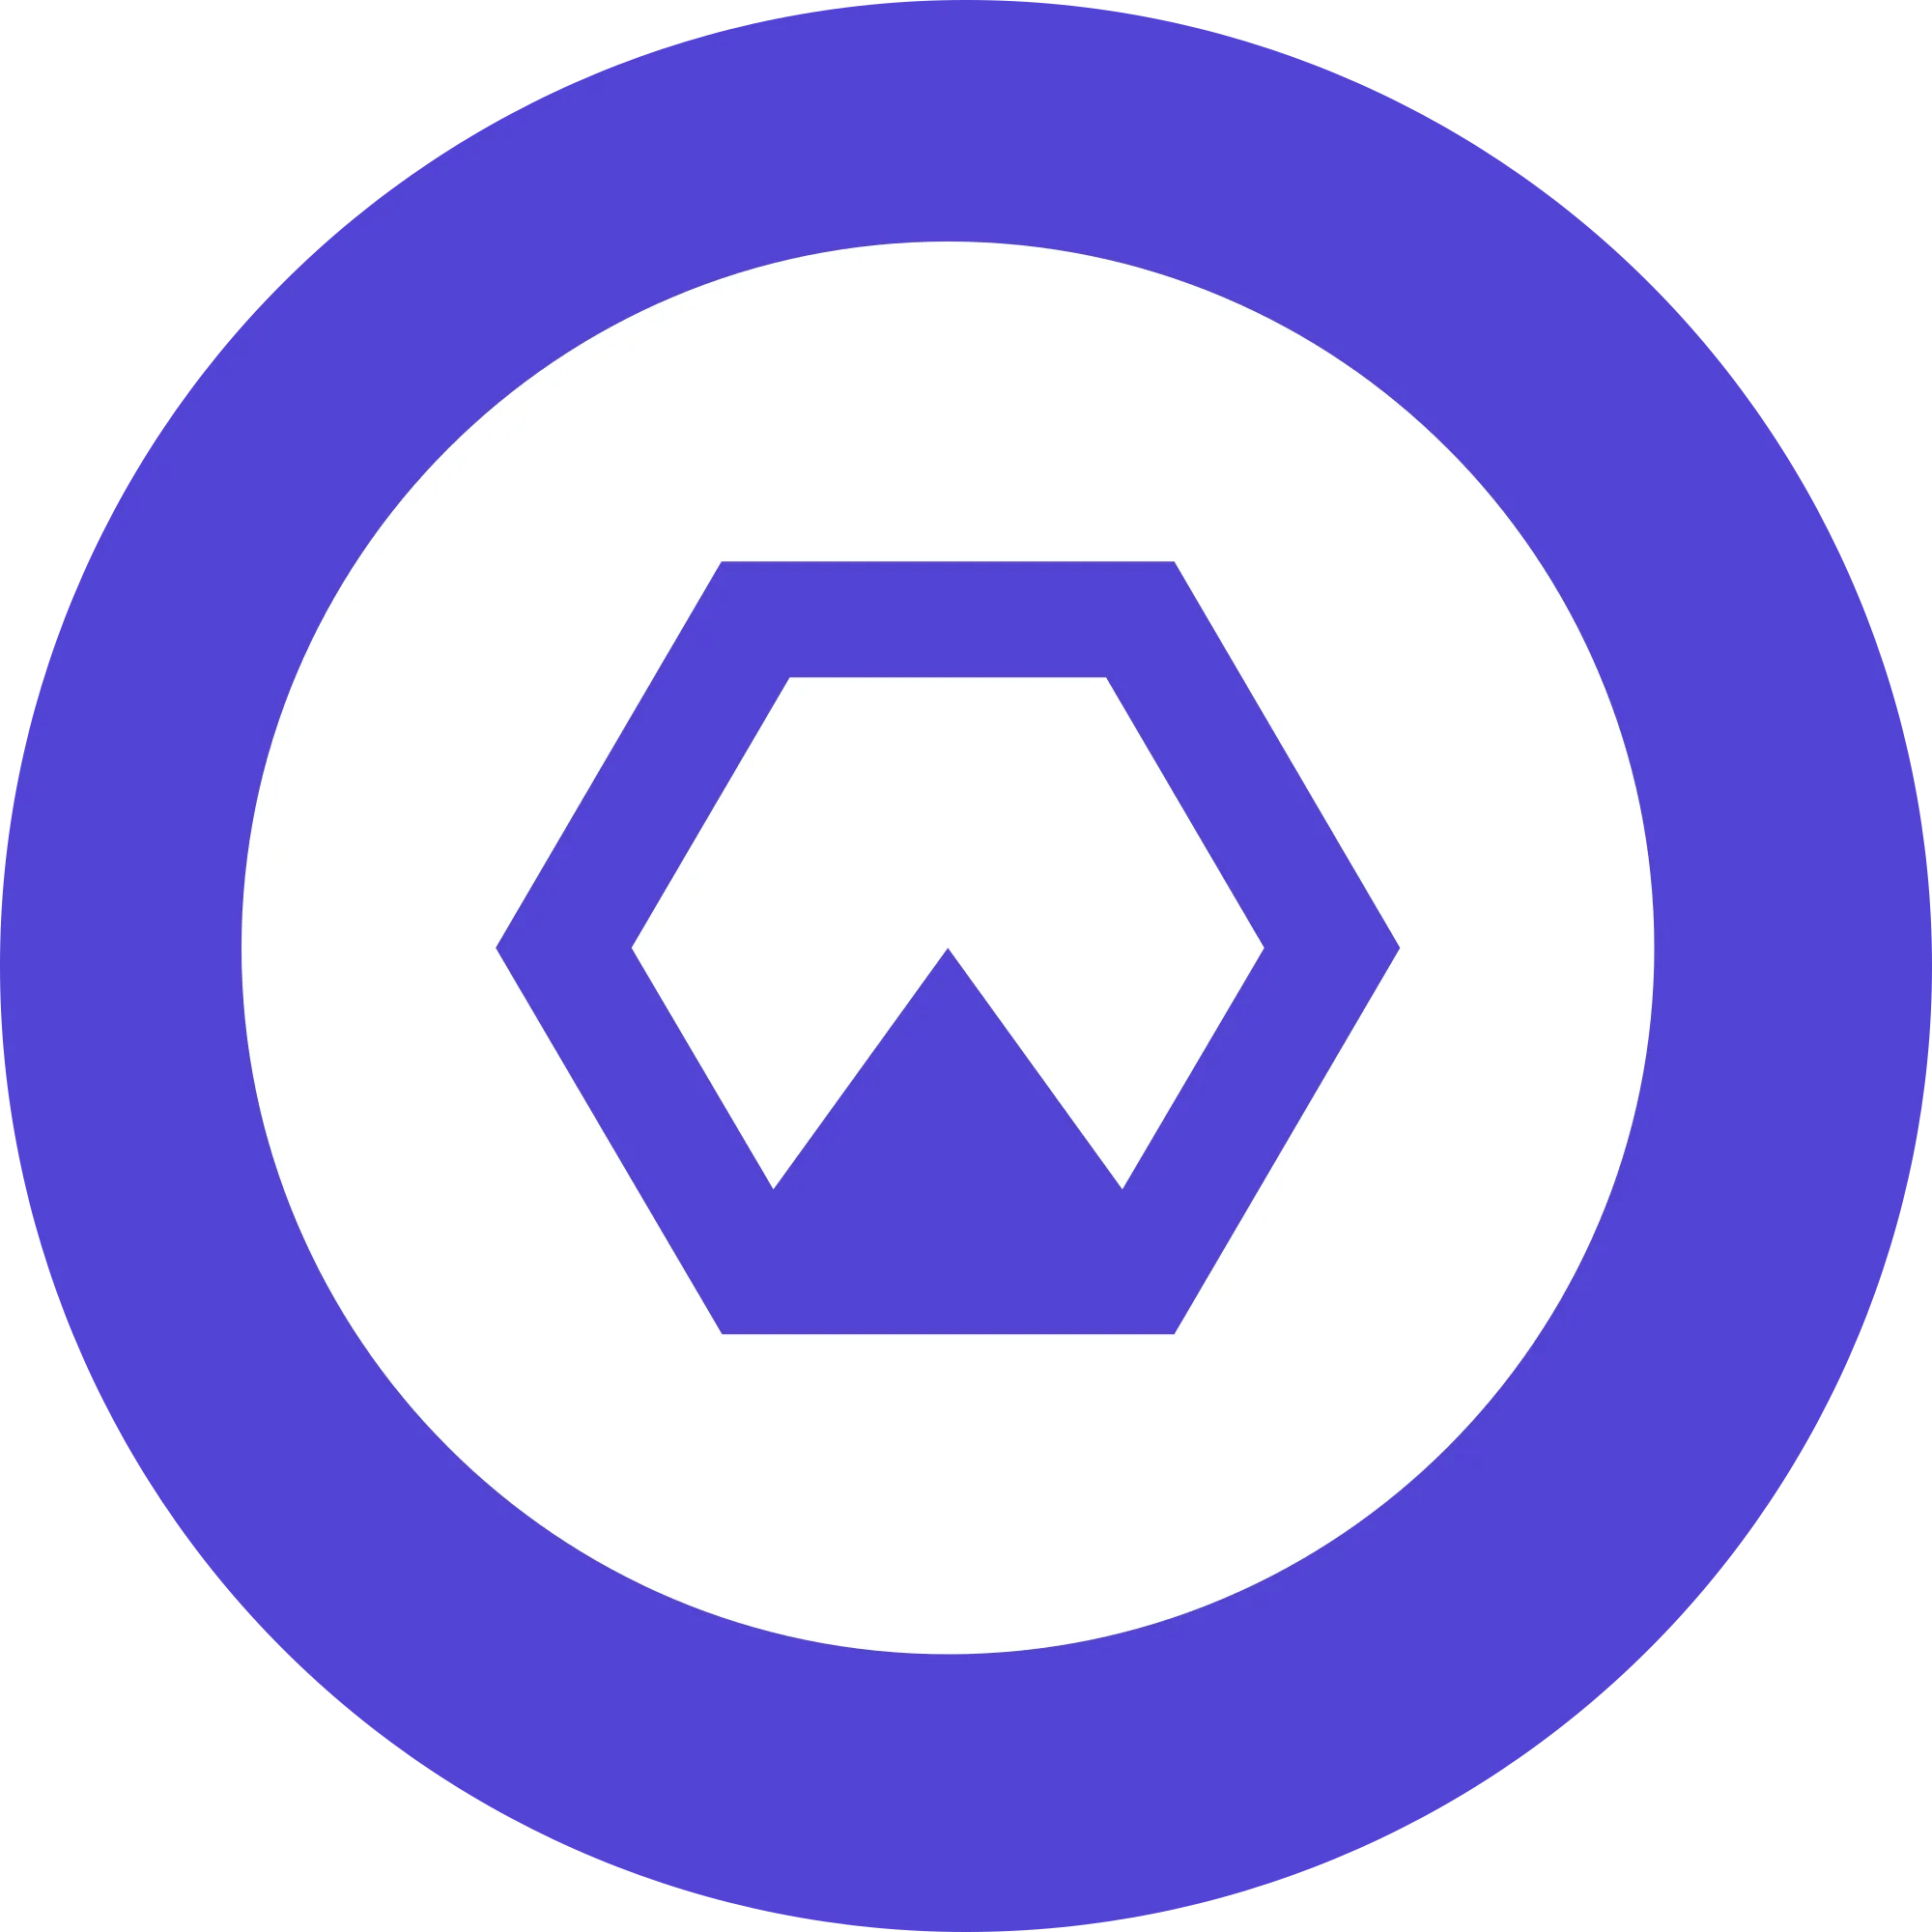 Tokenbox logo in png format